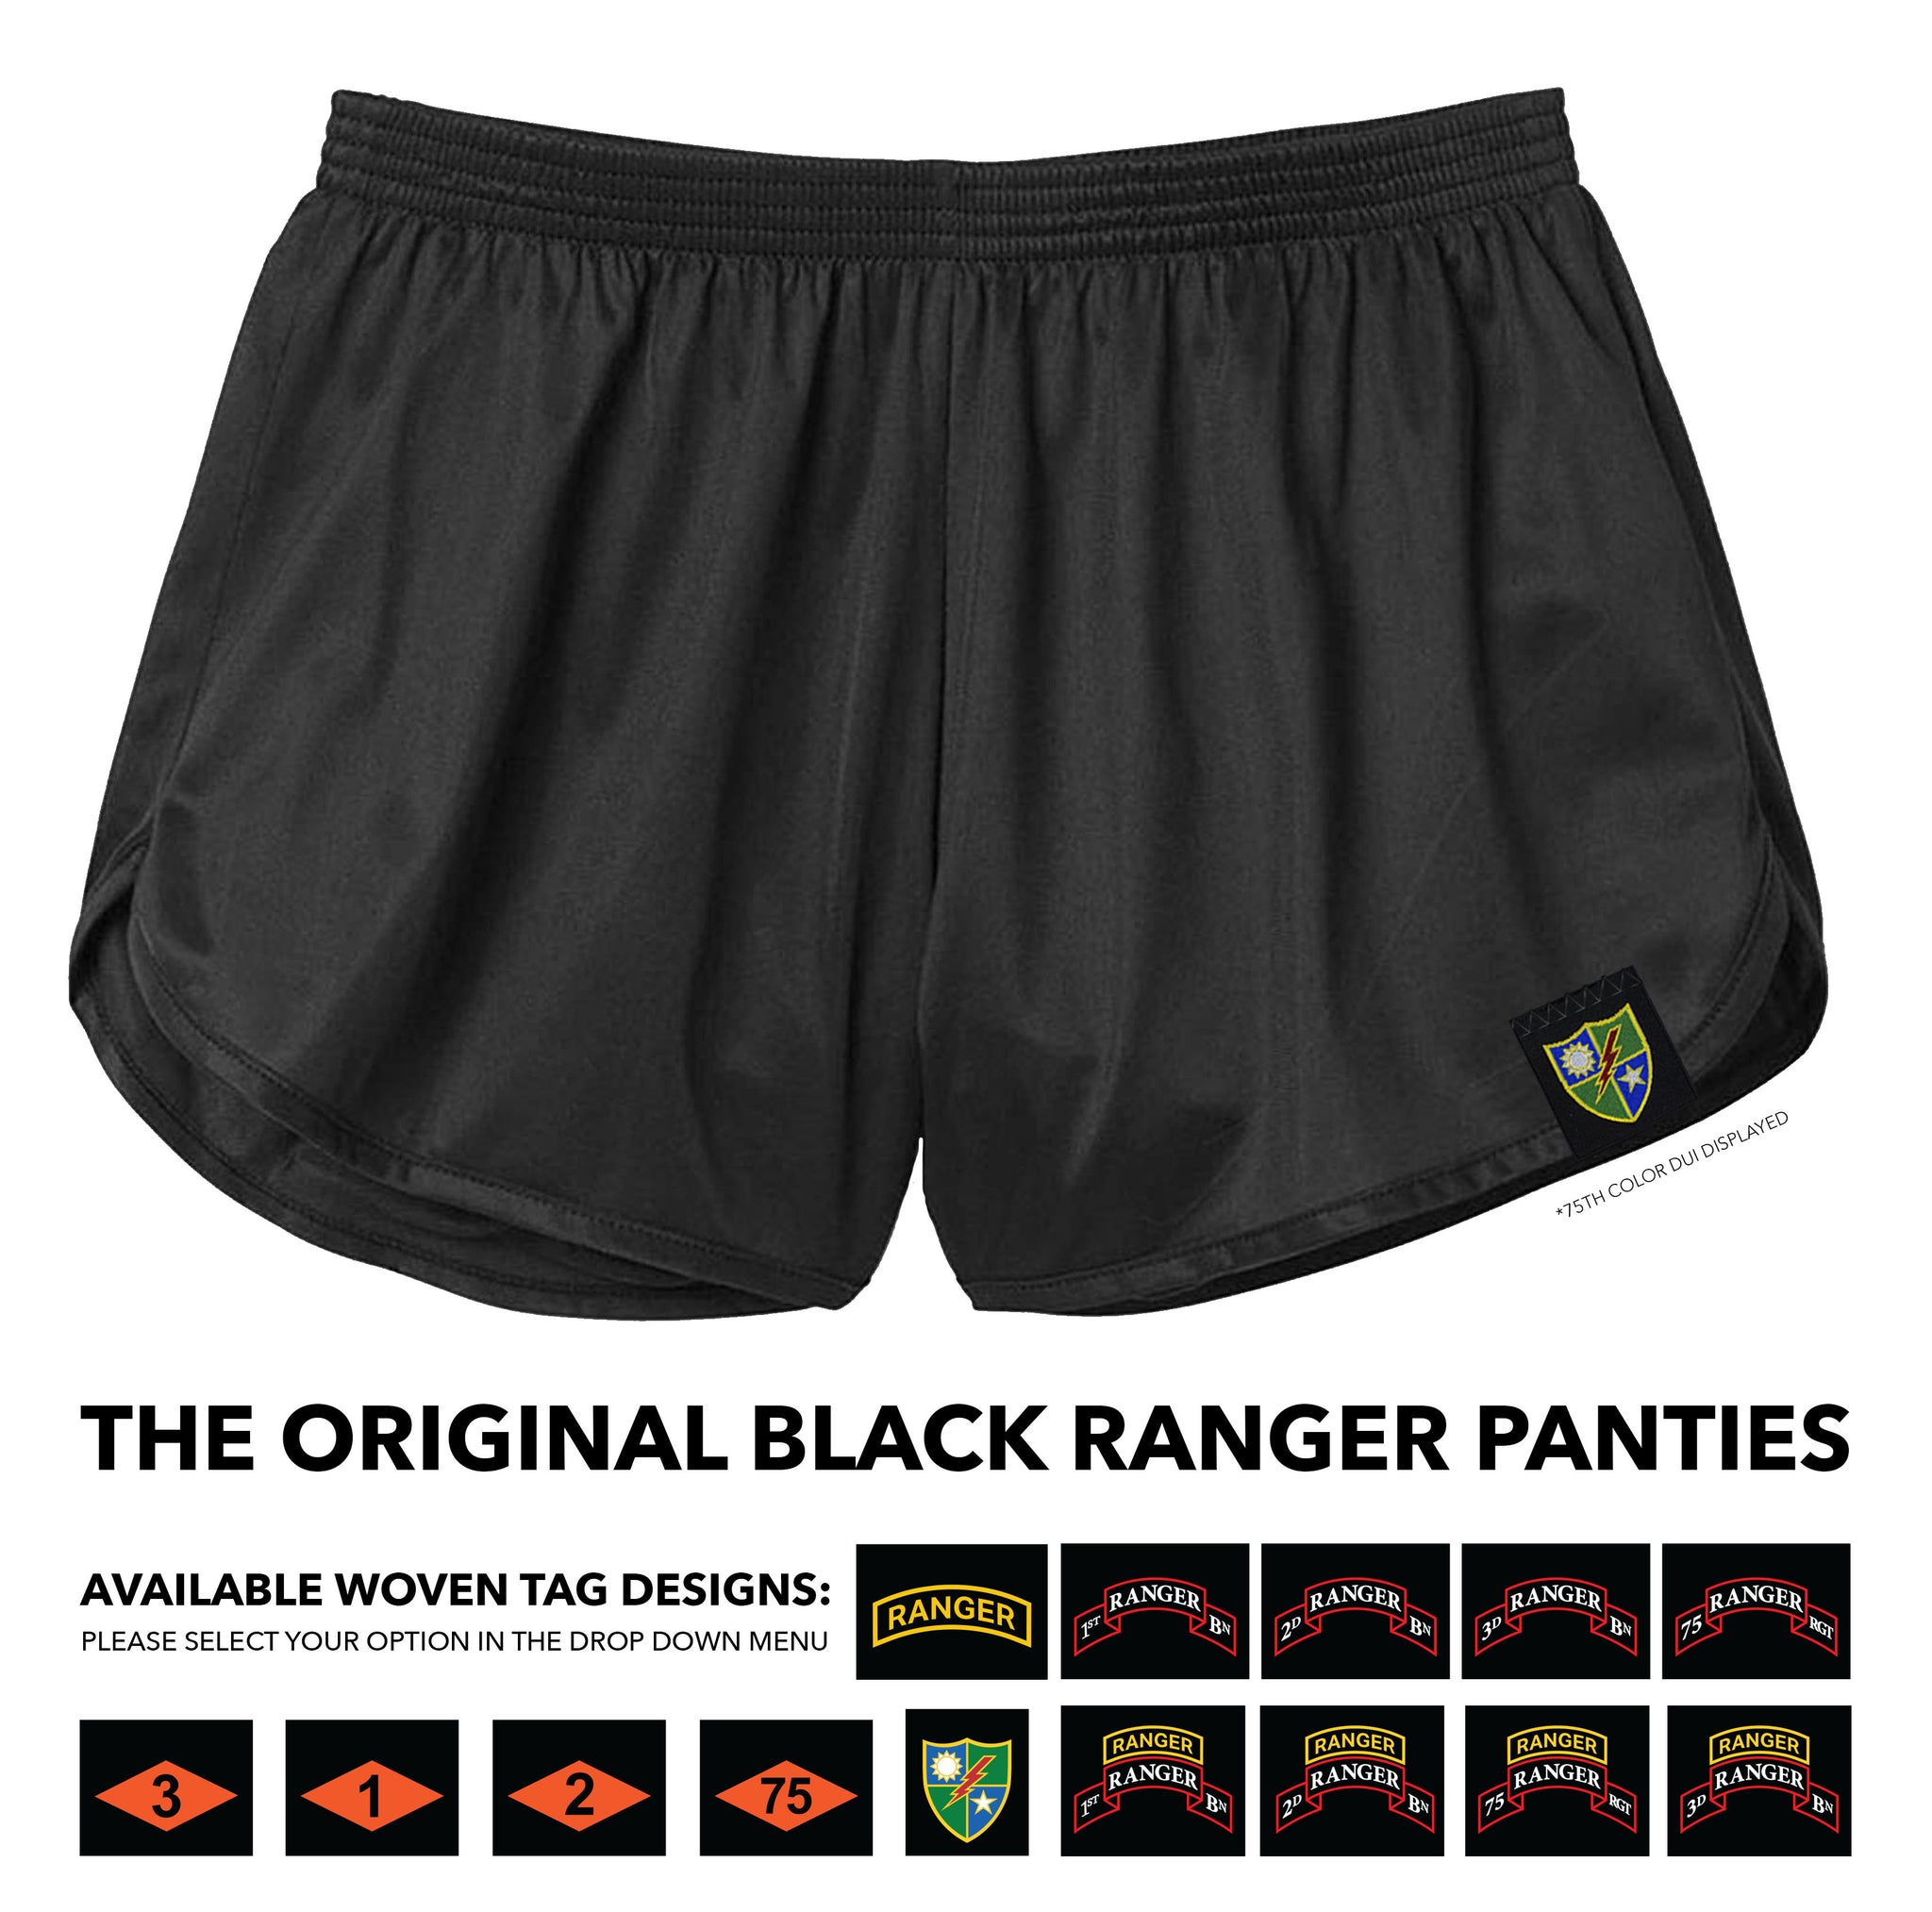 The Original Black Ranger Panties